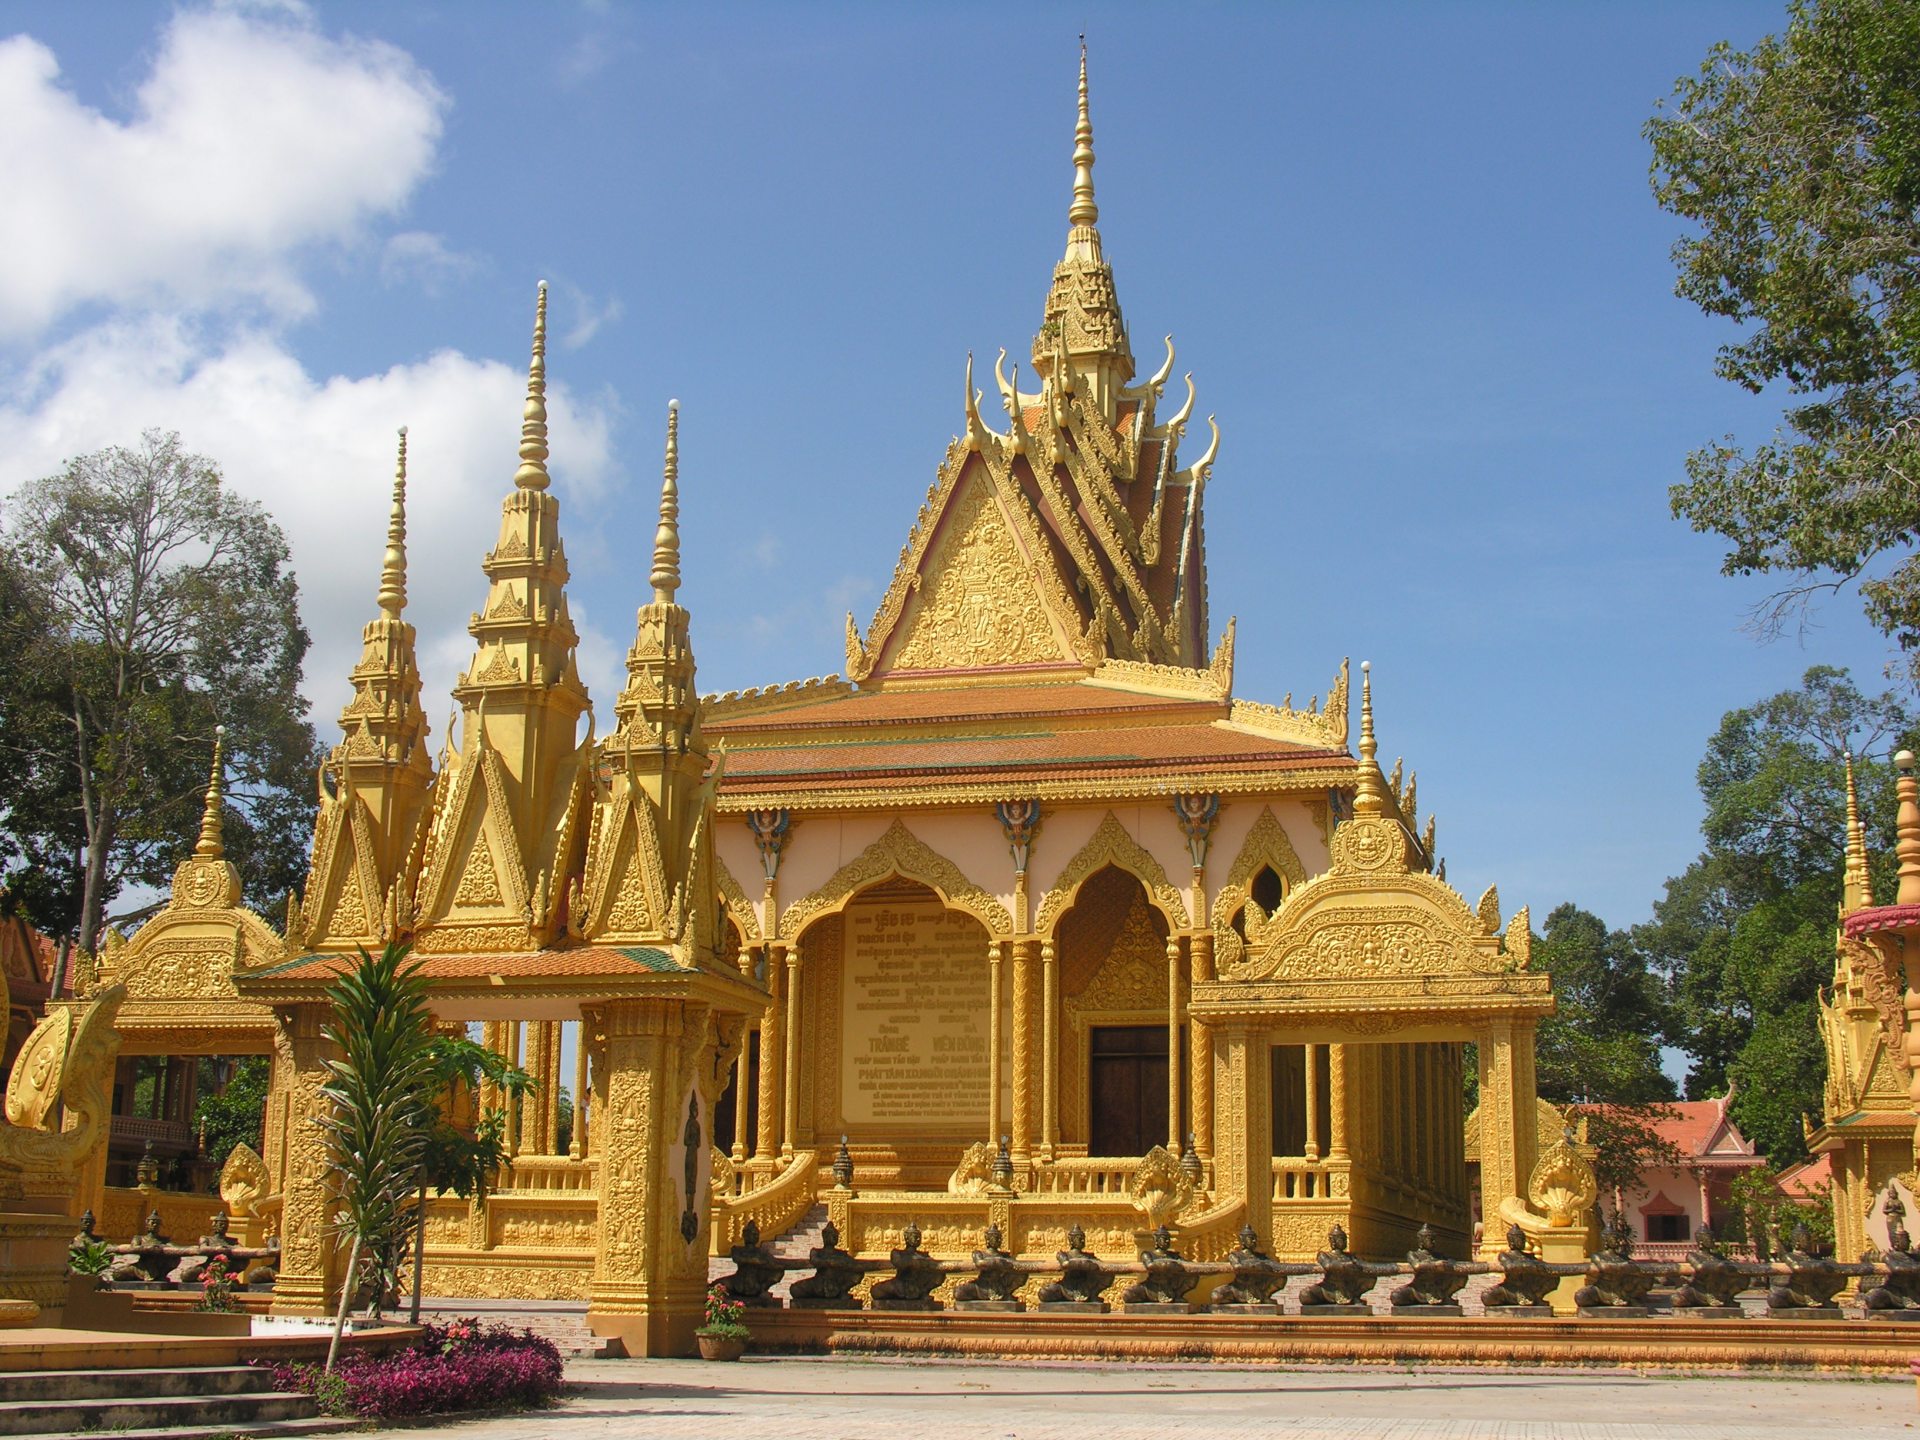 centenarian solemn khmer pagodas in western vietnam